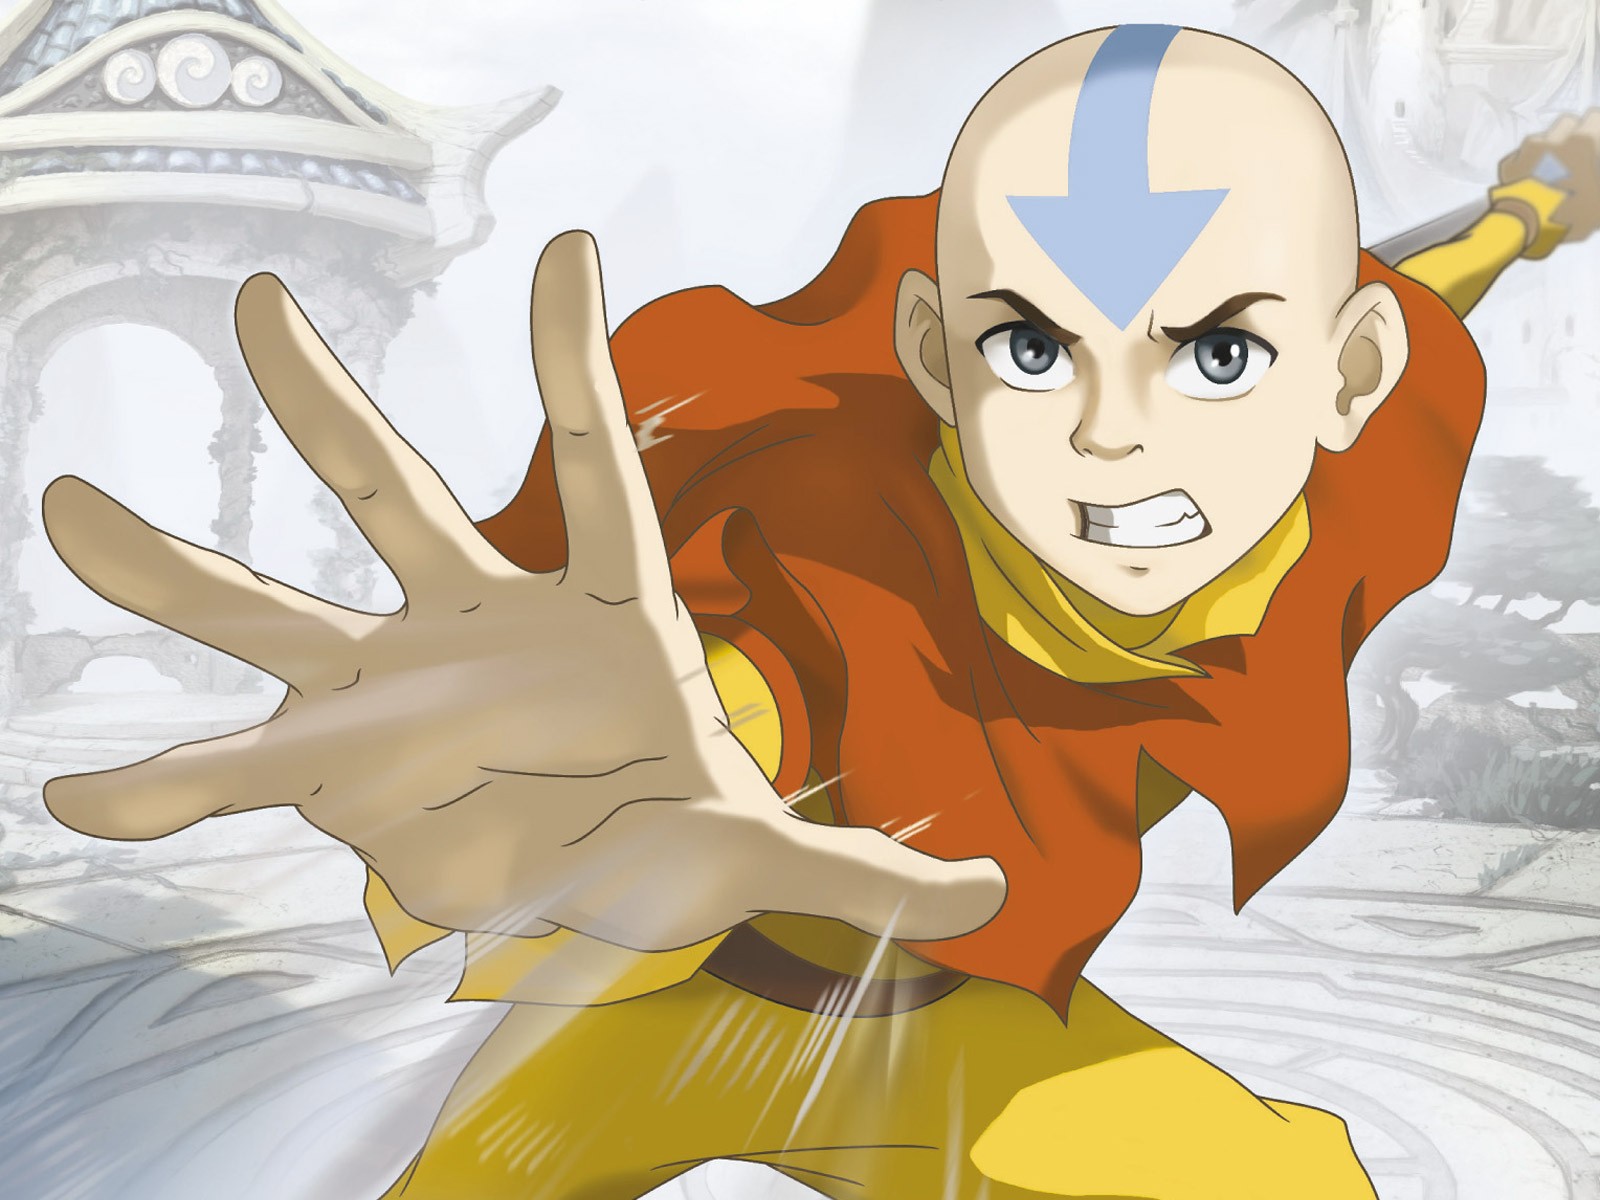 "Avatar: The Last Airbender" desktop wallpaper number 2 (1600 x 1200 pixels)